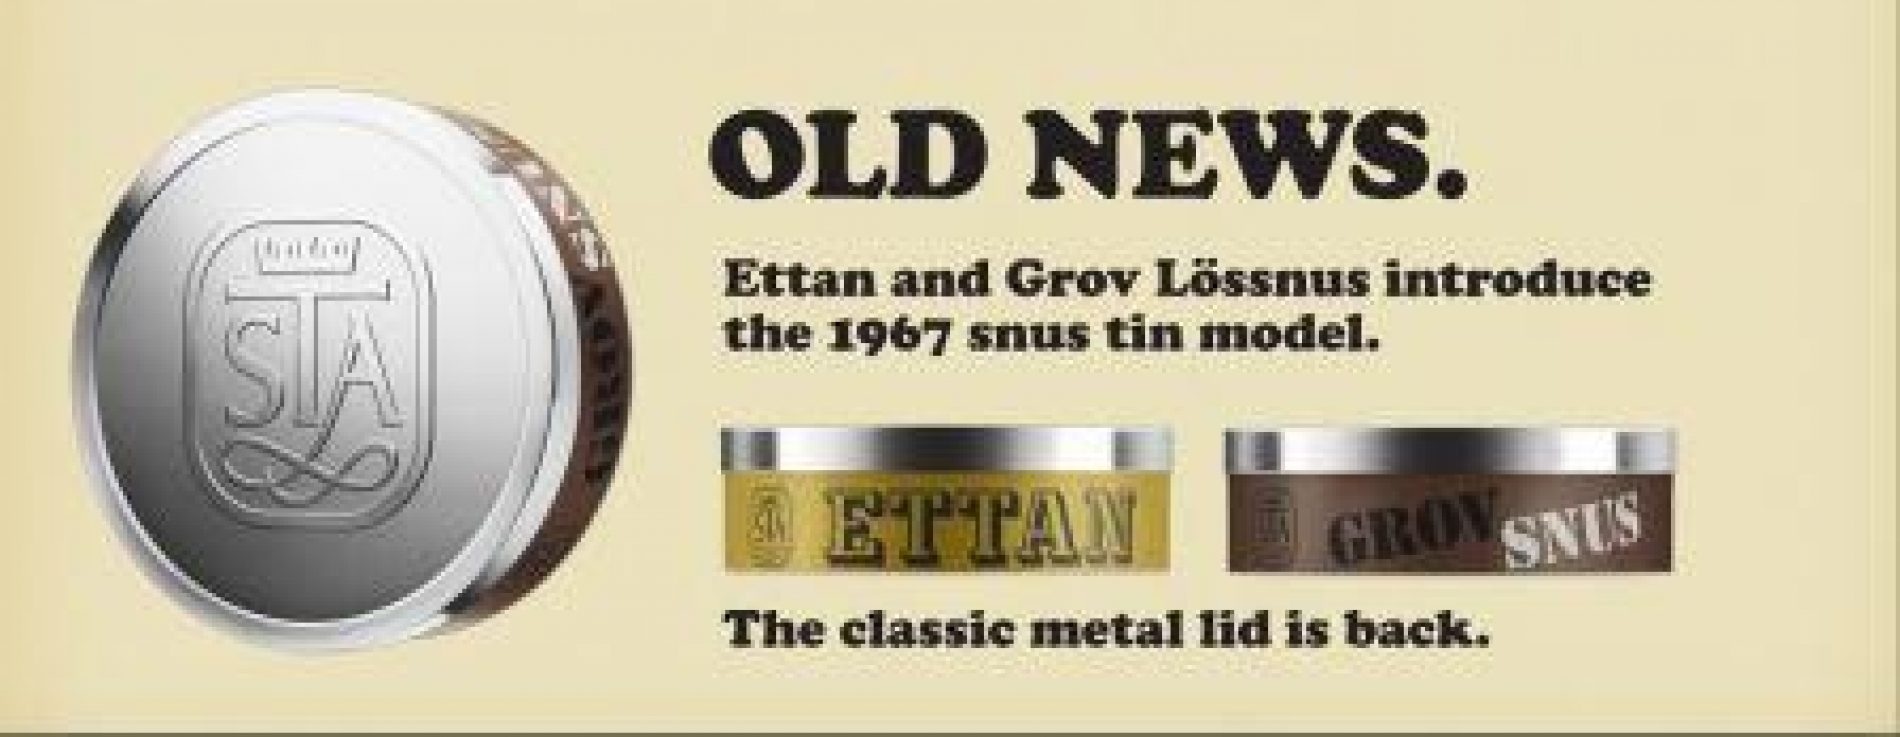 Ettan Lös Snus and Grov Lös Snus back in their classic 1967 tins